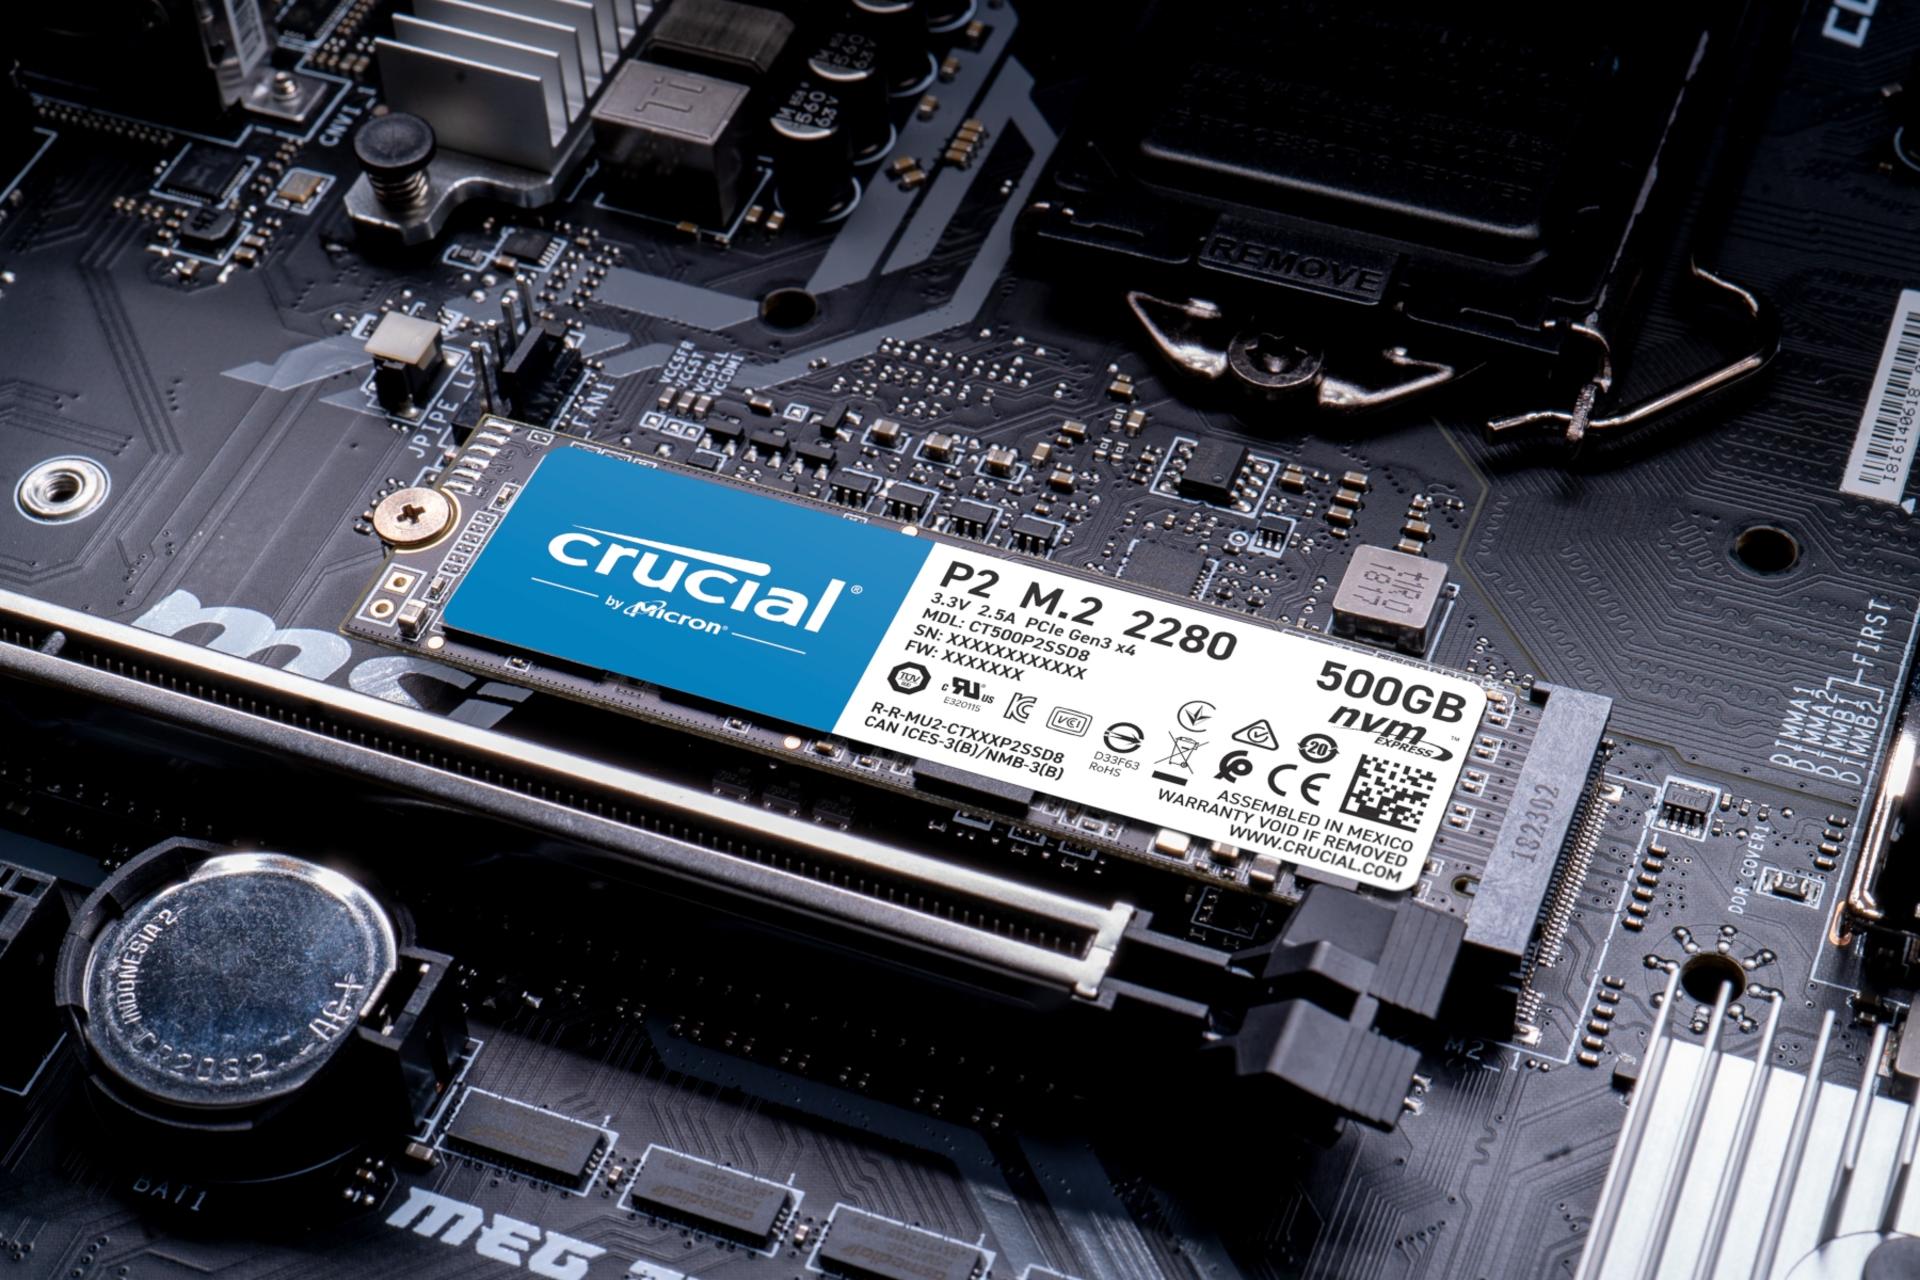 SSD کروشیال Crucial P2 NVMe M.2 500GB ظرفیت 500 گیگابایت روی مادربرد